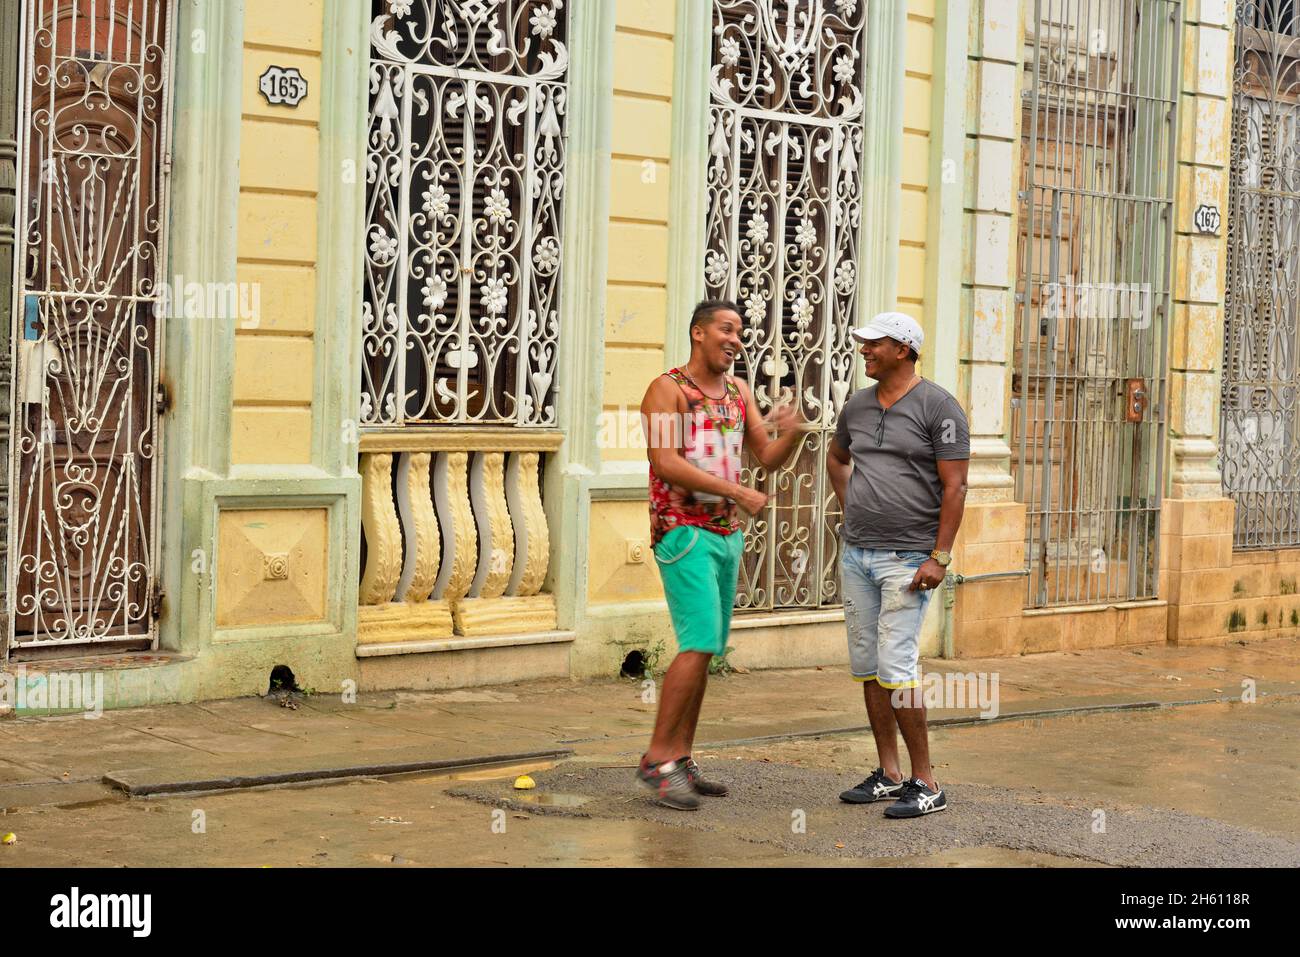 Straßenszene im Zentrum von Havanna. Zwei Männer unterhalten sich, La Habana (Havanna), Habana, Kuba Stockfoto